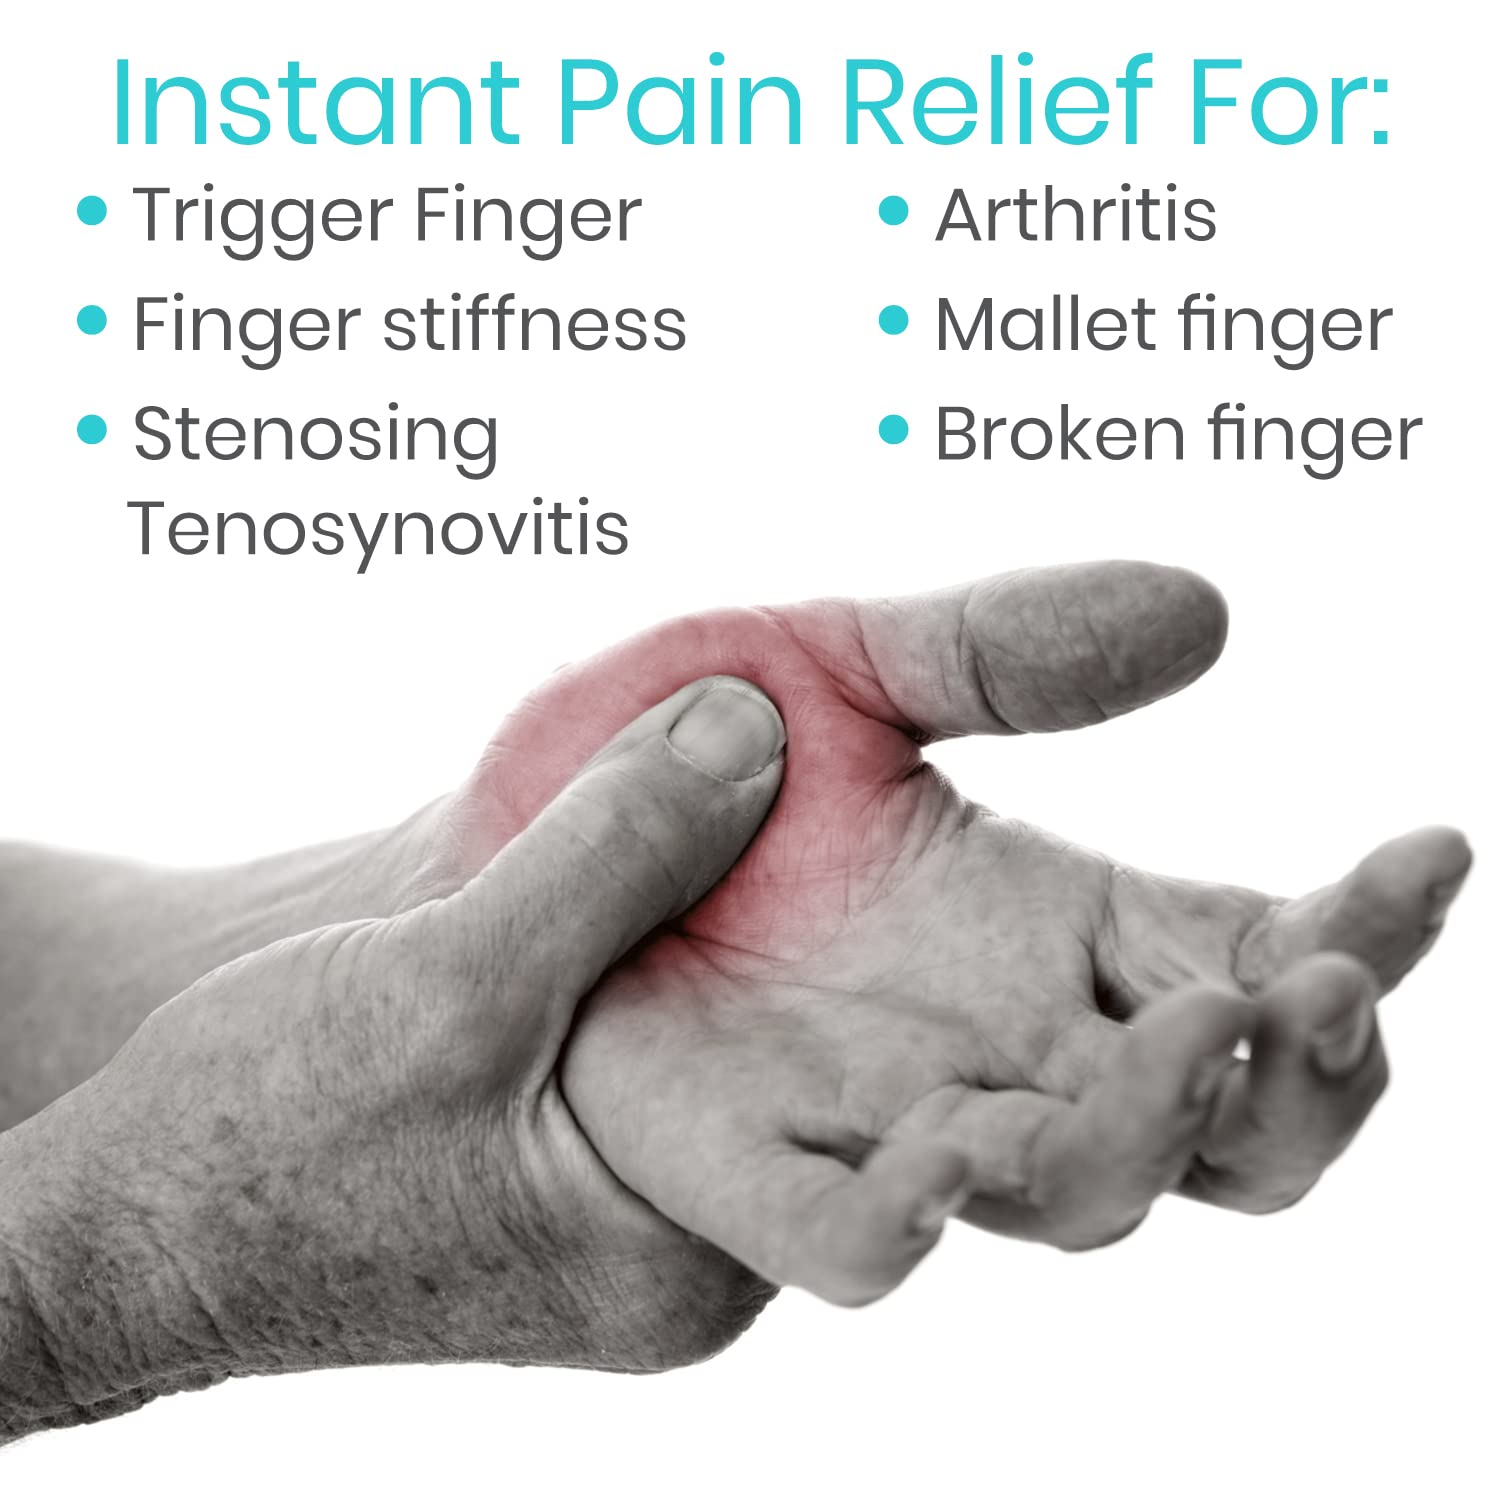 Vive Finger Splint (2 Pack) - Universal Finger Straightener - Broken and Trigger Finger Splints - Finger Brace for Arthritis pain and Support - Sprain Relief for Middle, Index, Ring, Pinky Fingers